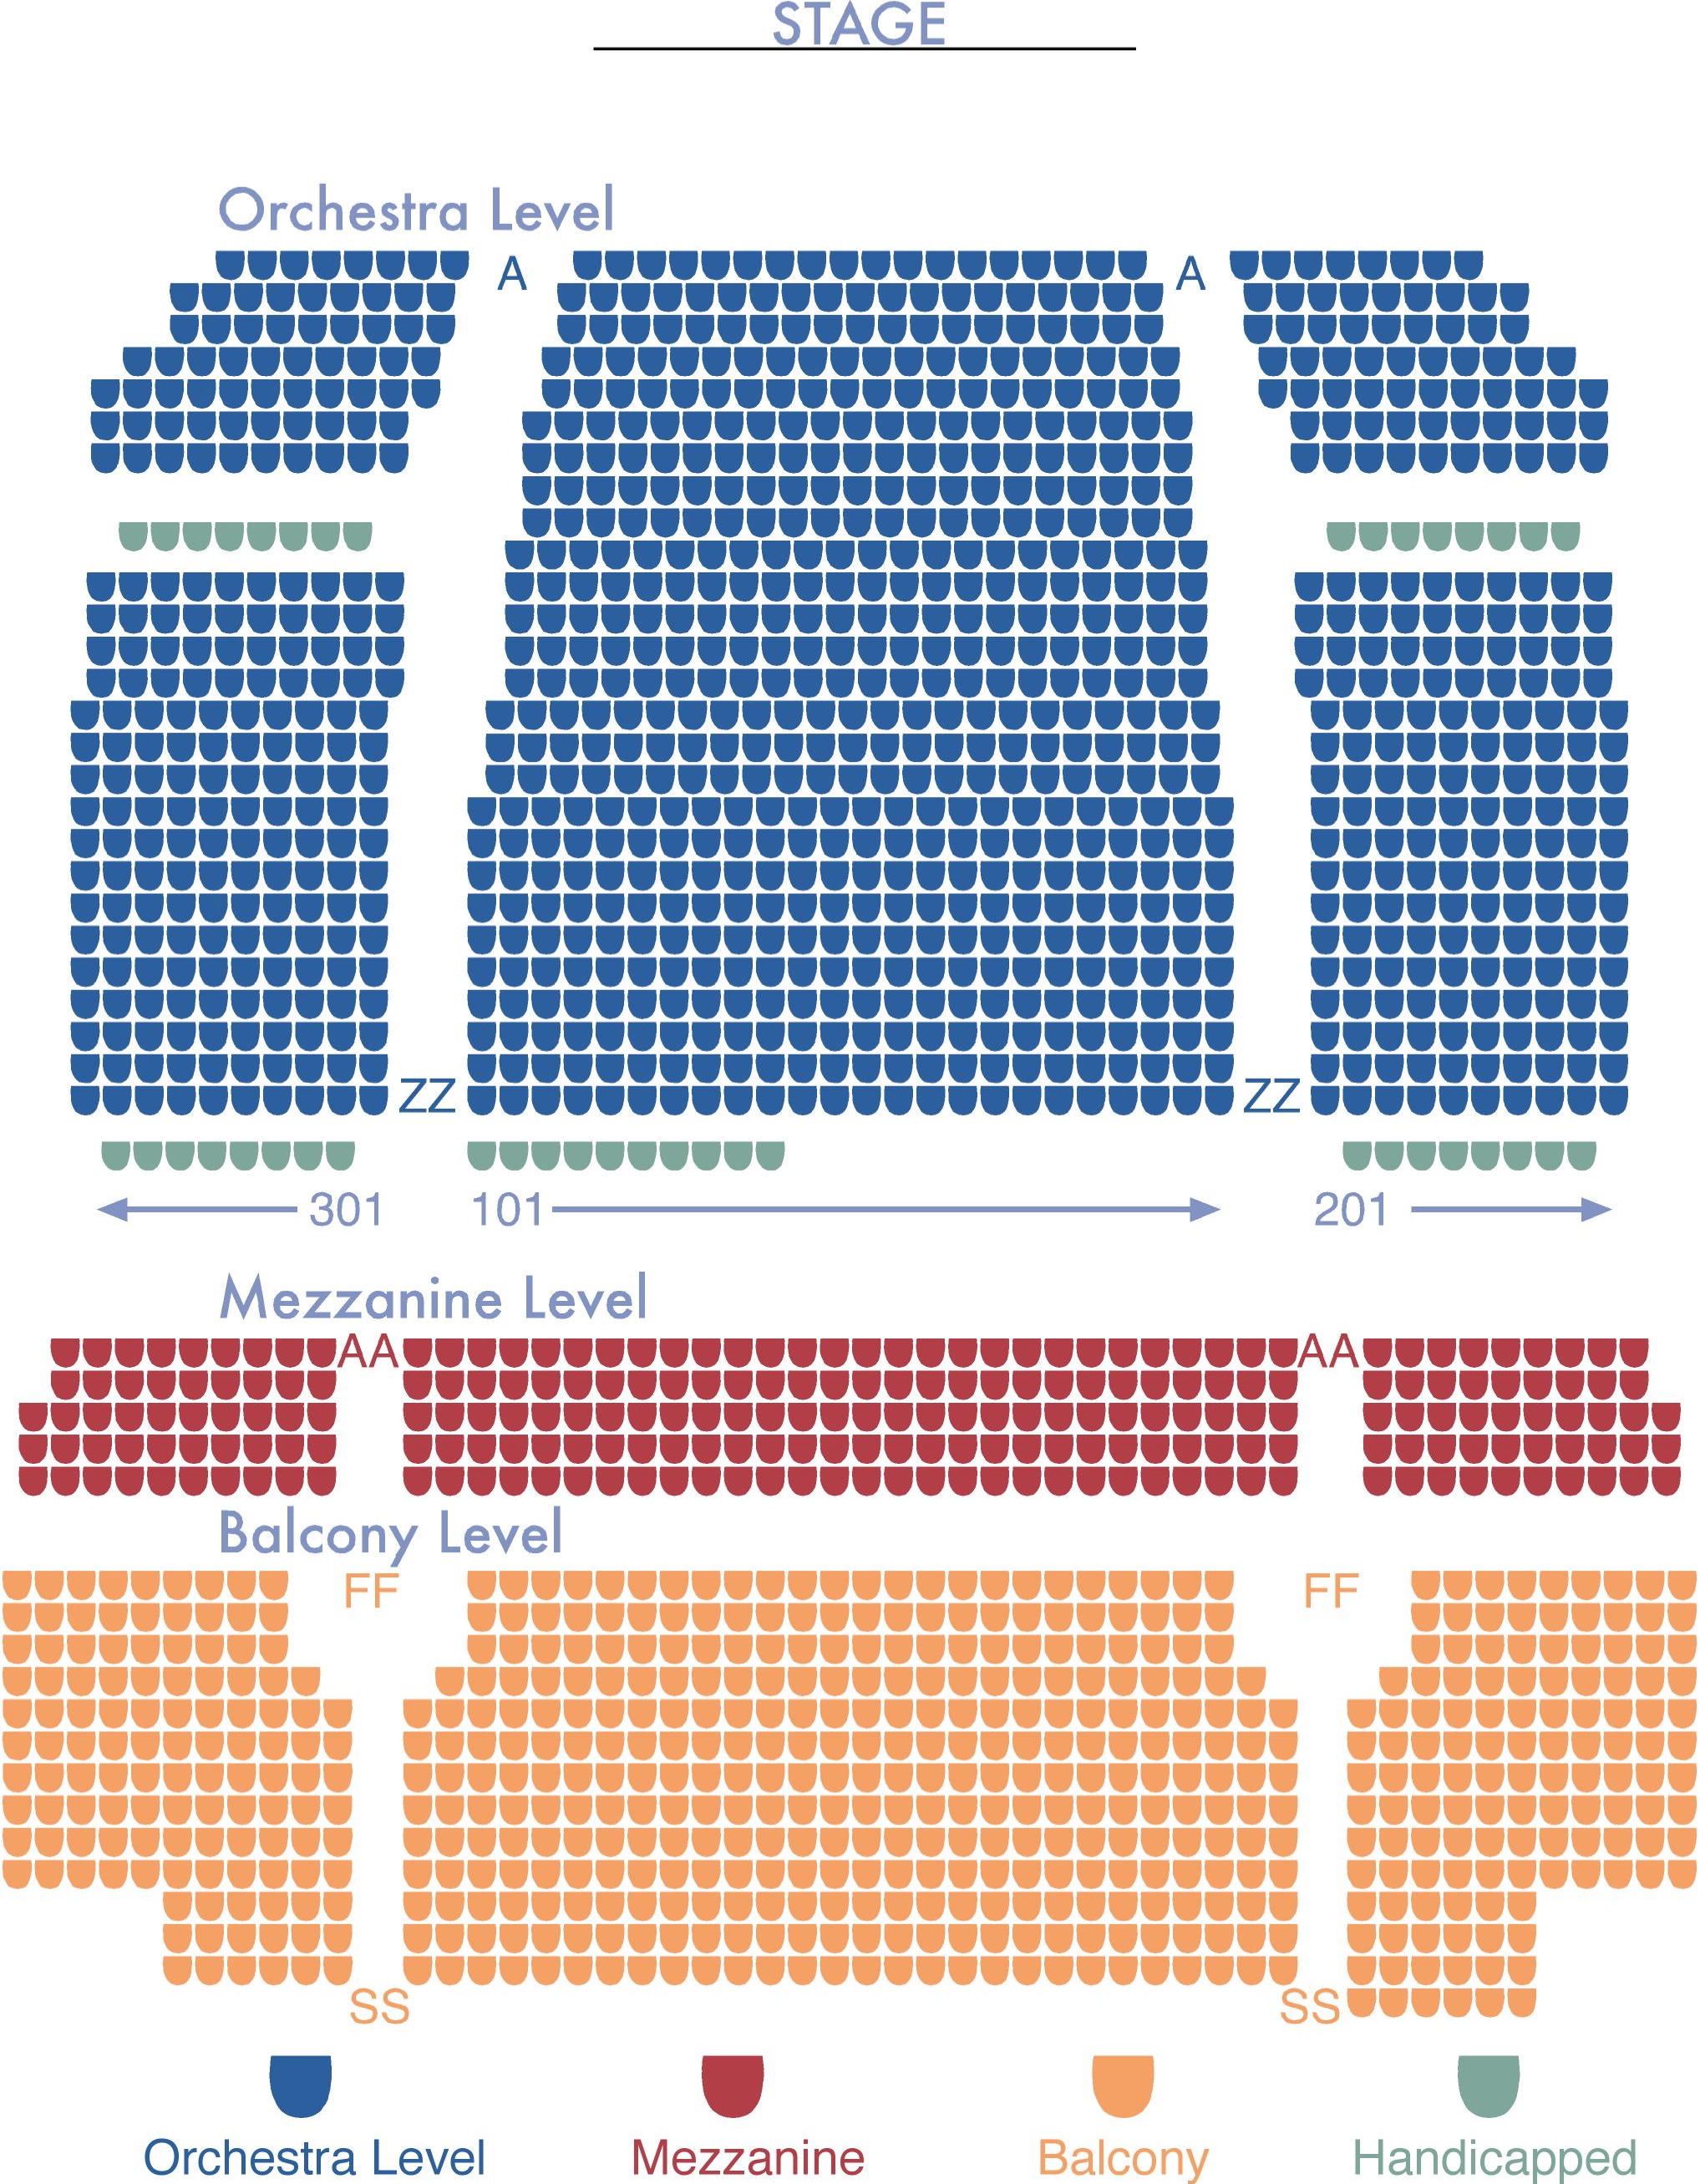 Popejoy Hall Seating Chart